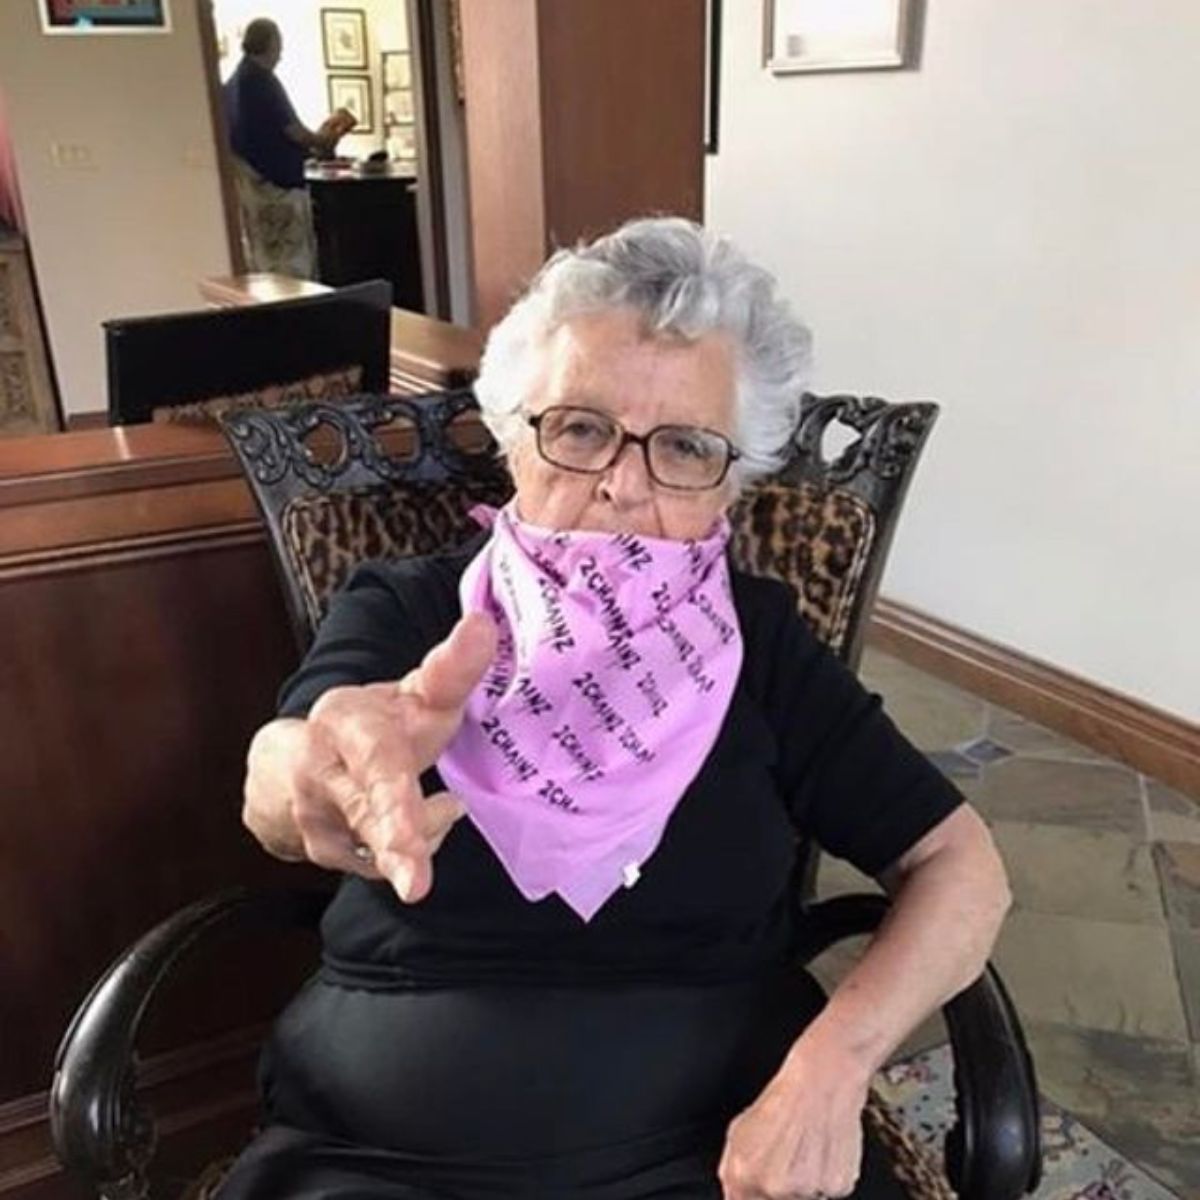 Photo of Adam Pally's grandmother, Sylvia showing a gun sign